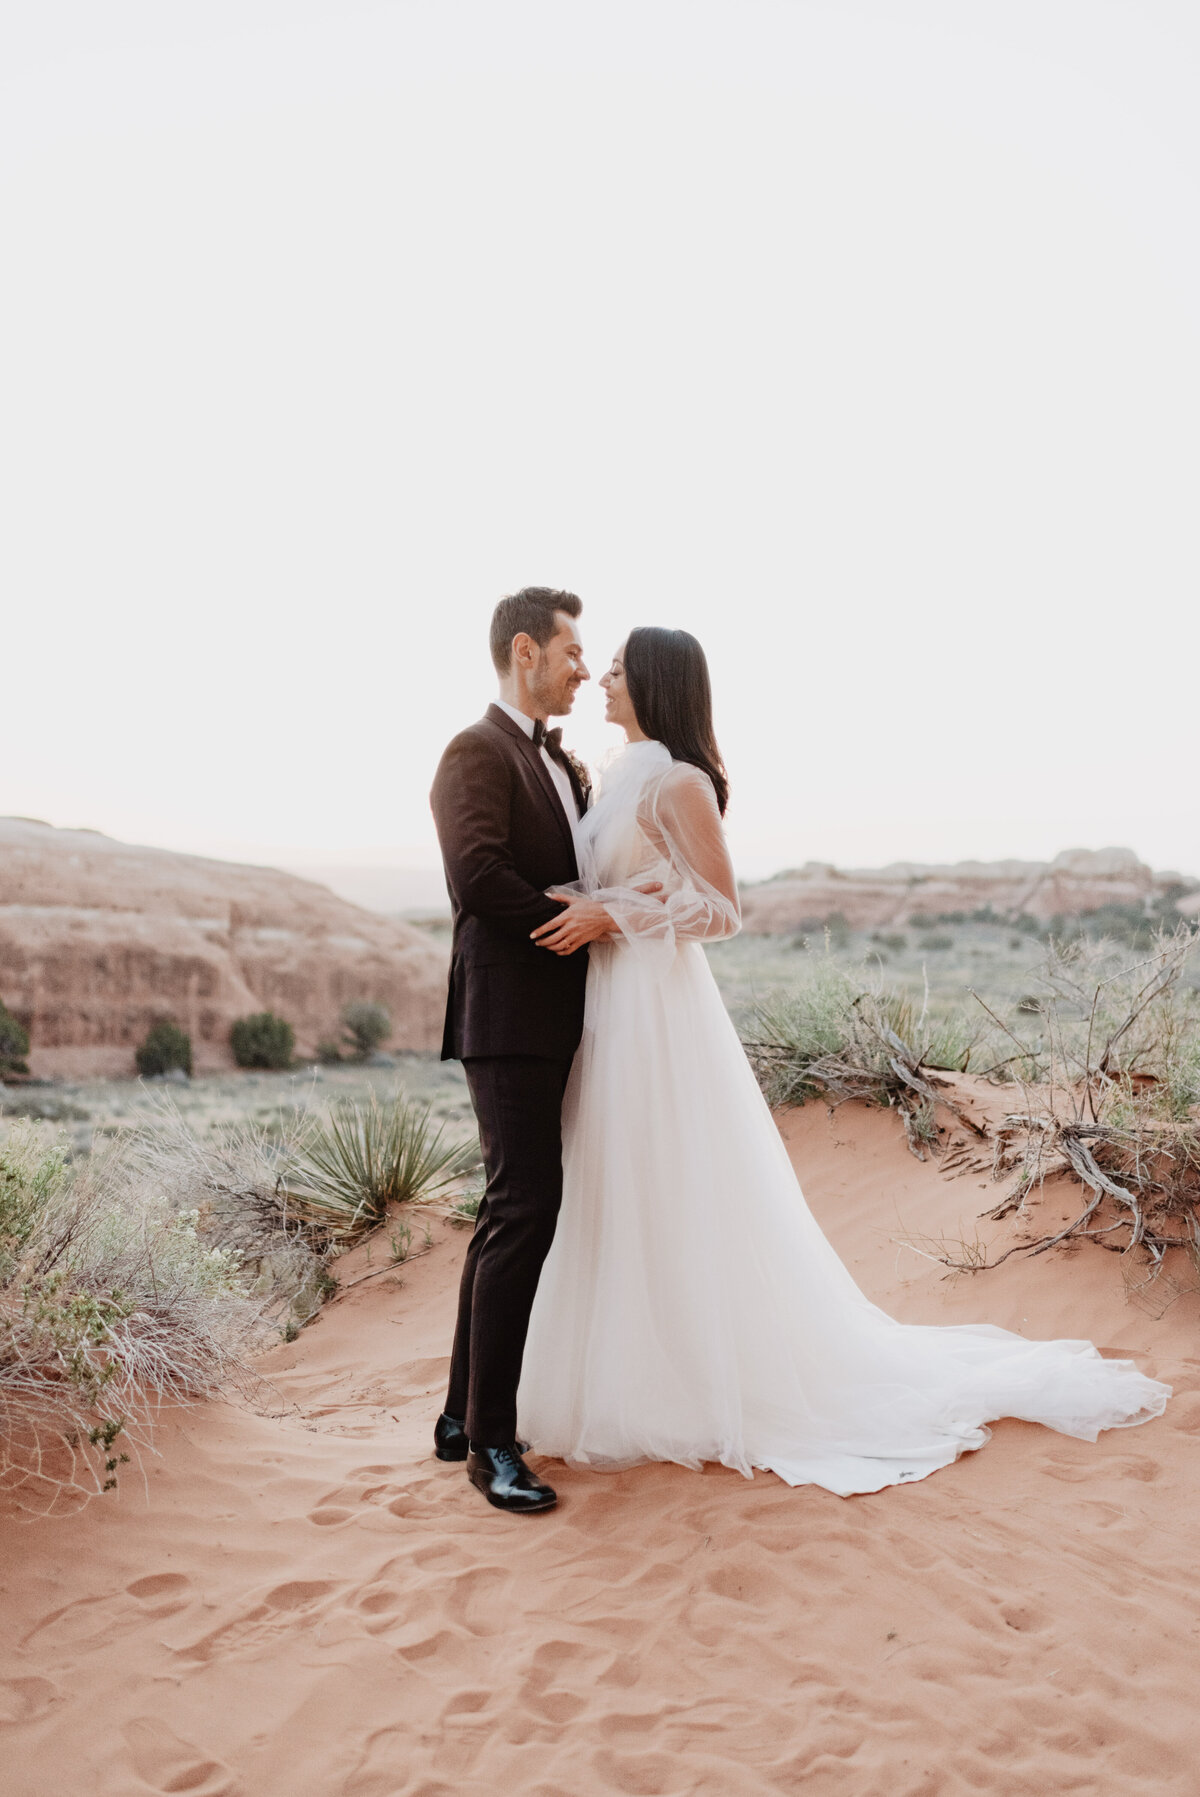 Utah elopement photographer captures couple embracing after intimate wedding ceremony